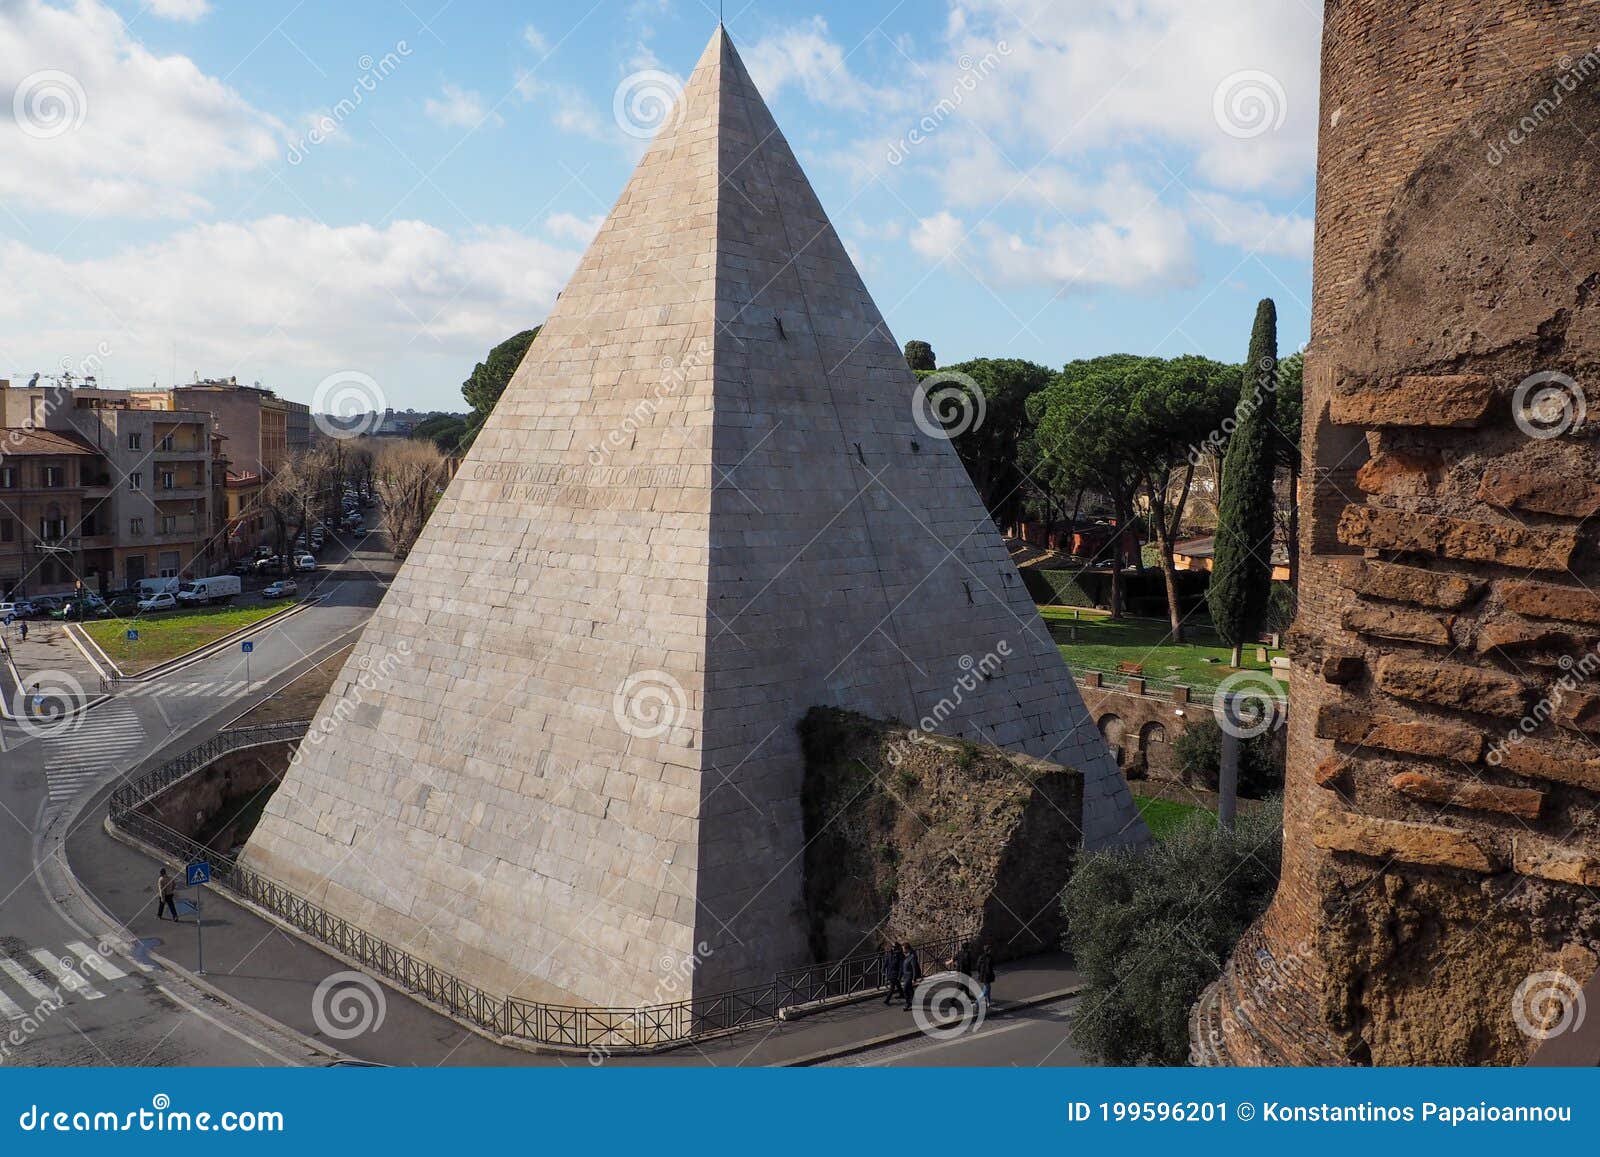 Învins îndoit Vedere piramide rome Mândru stil A invita